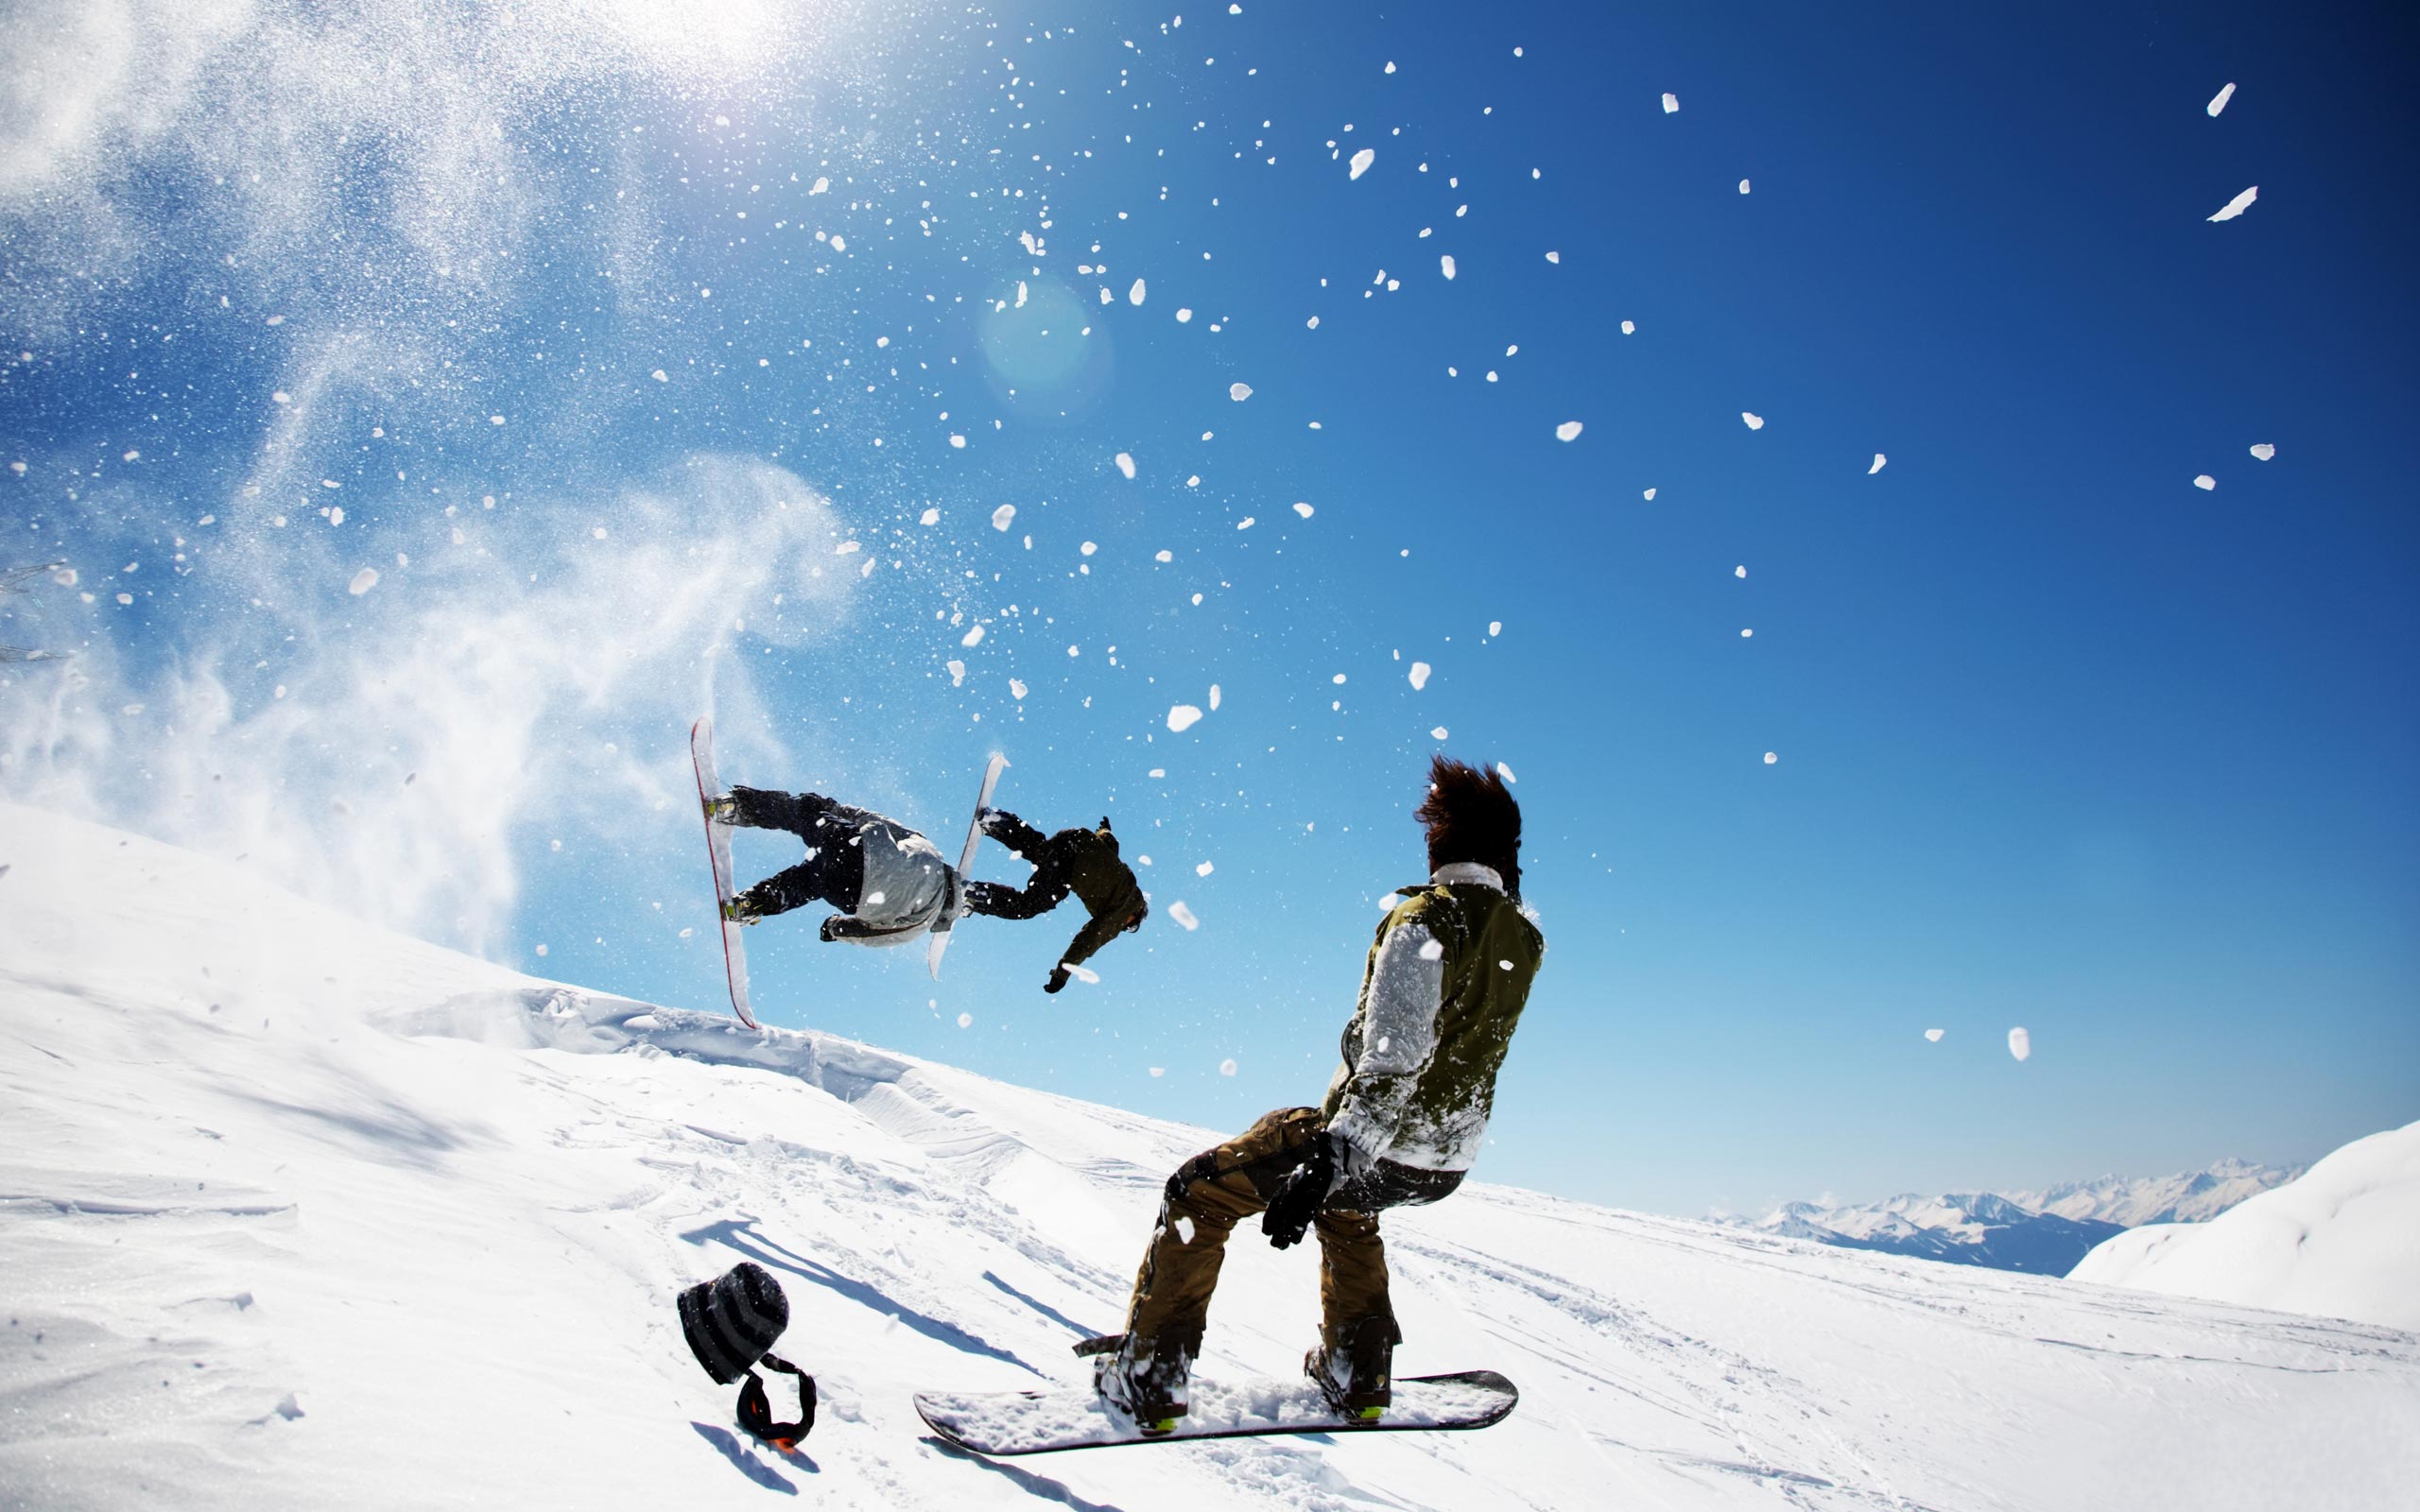 Winter Snowboarding for 2560 x 1600 widescreen resolution